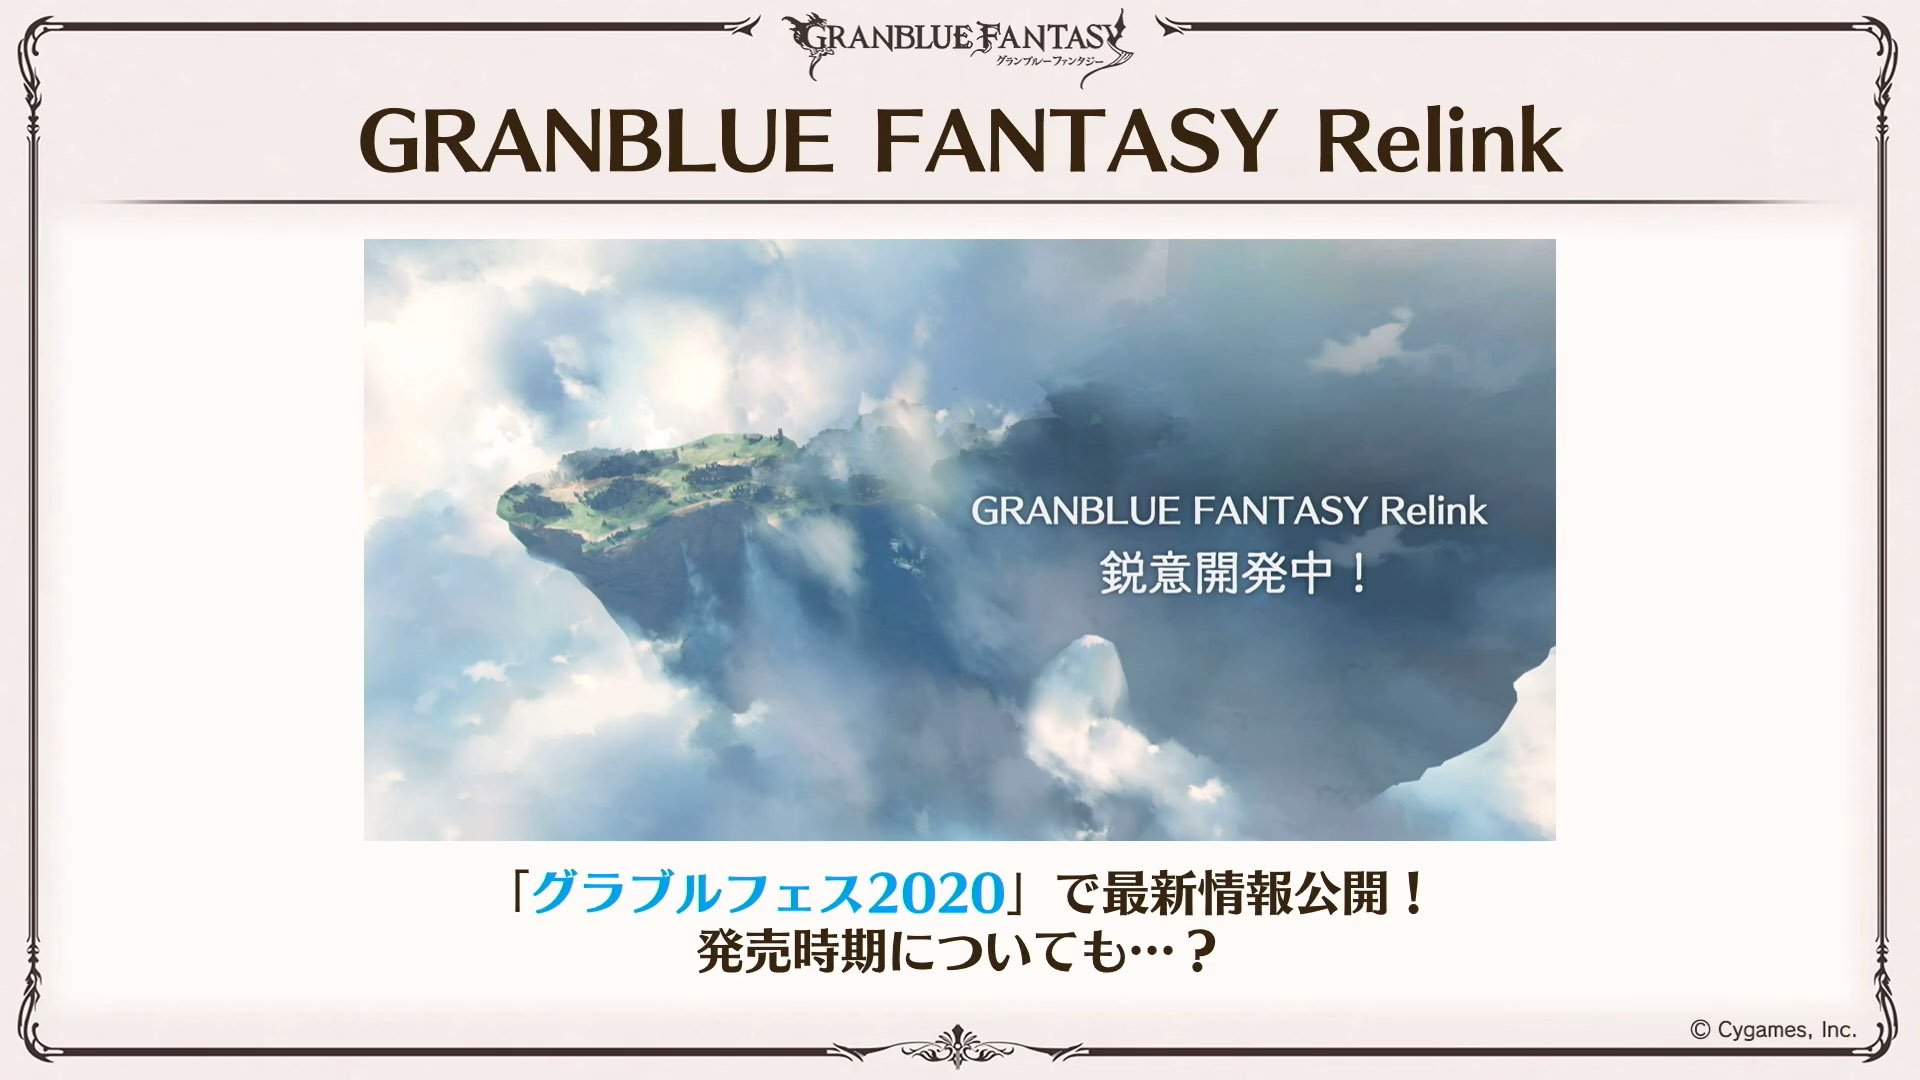 Granblue-Fantasy-Relink_Slide_08-08-20_0